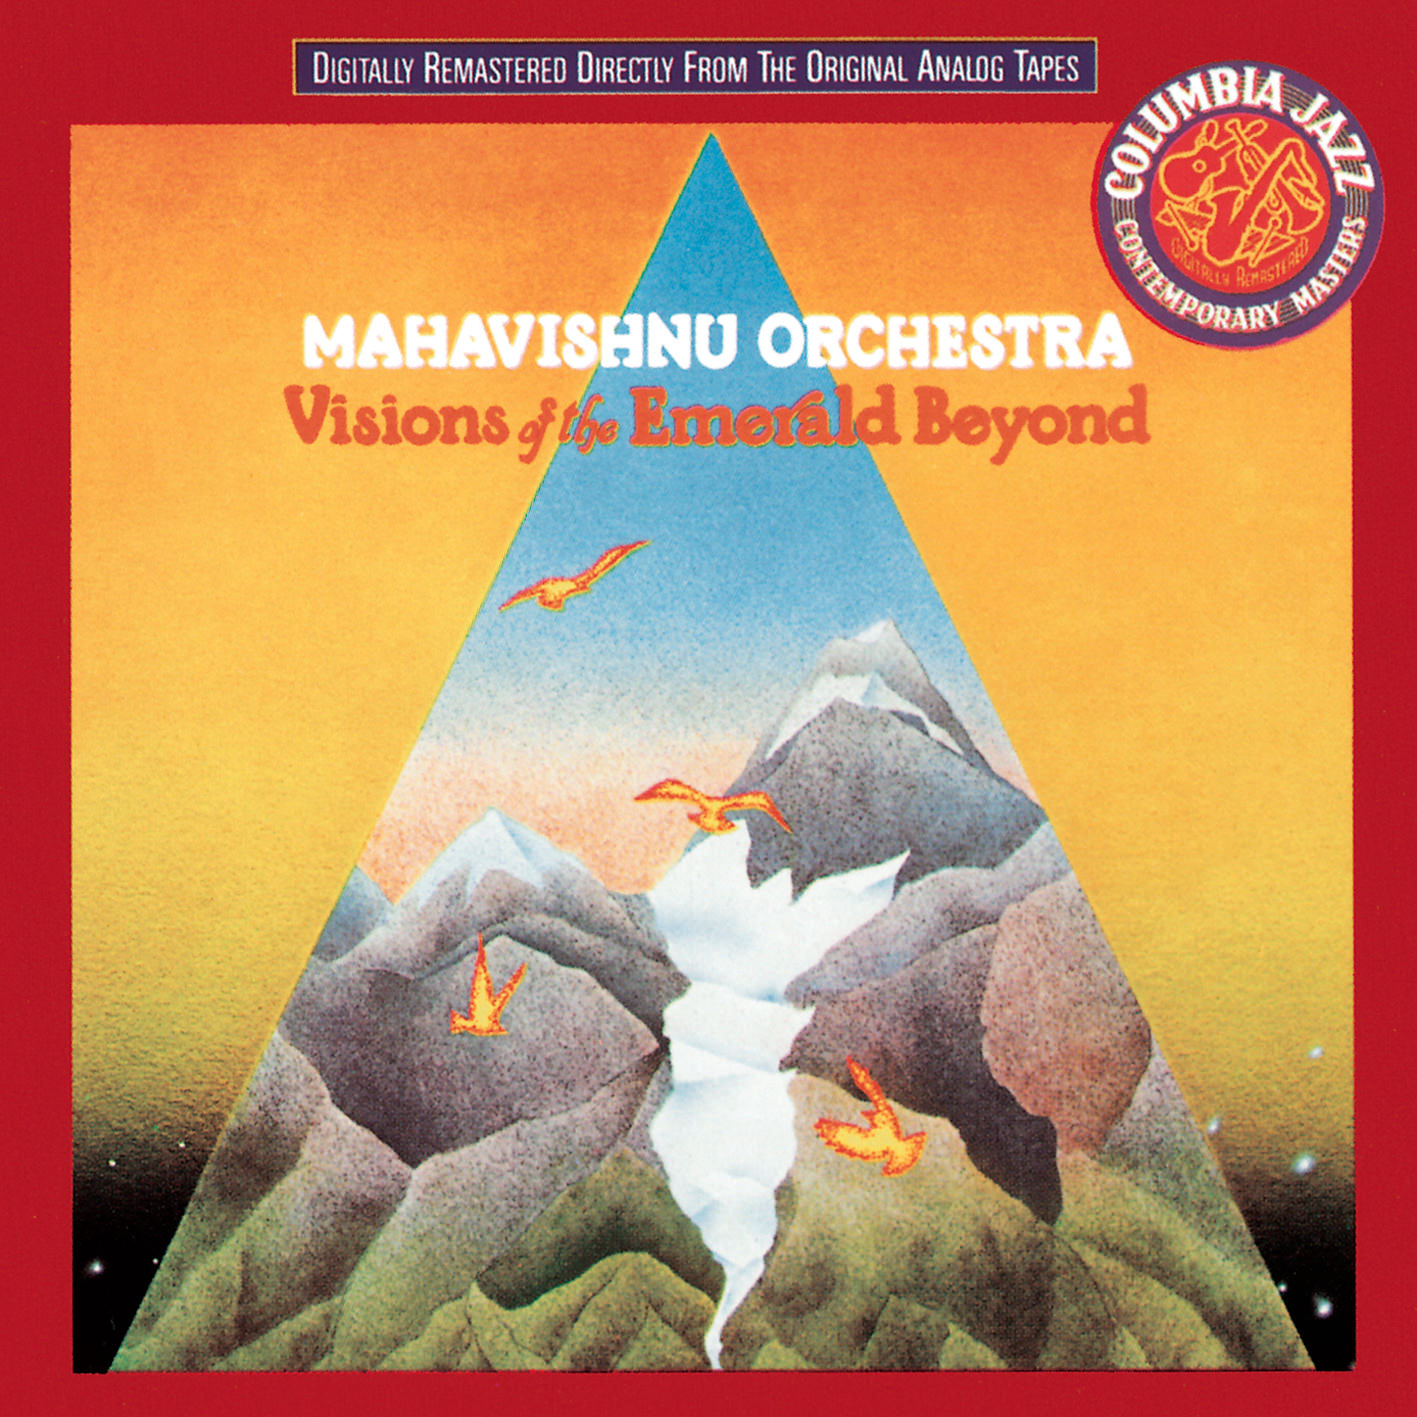 The Mahavishnu Orchestra – Visions Of The Emerald Beyond (1975/2018) [AcousticSounds FLAC 24bit/96kHz]